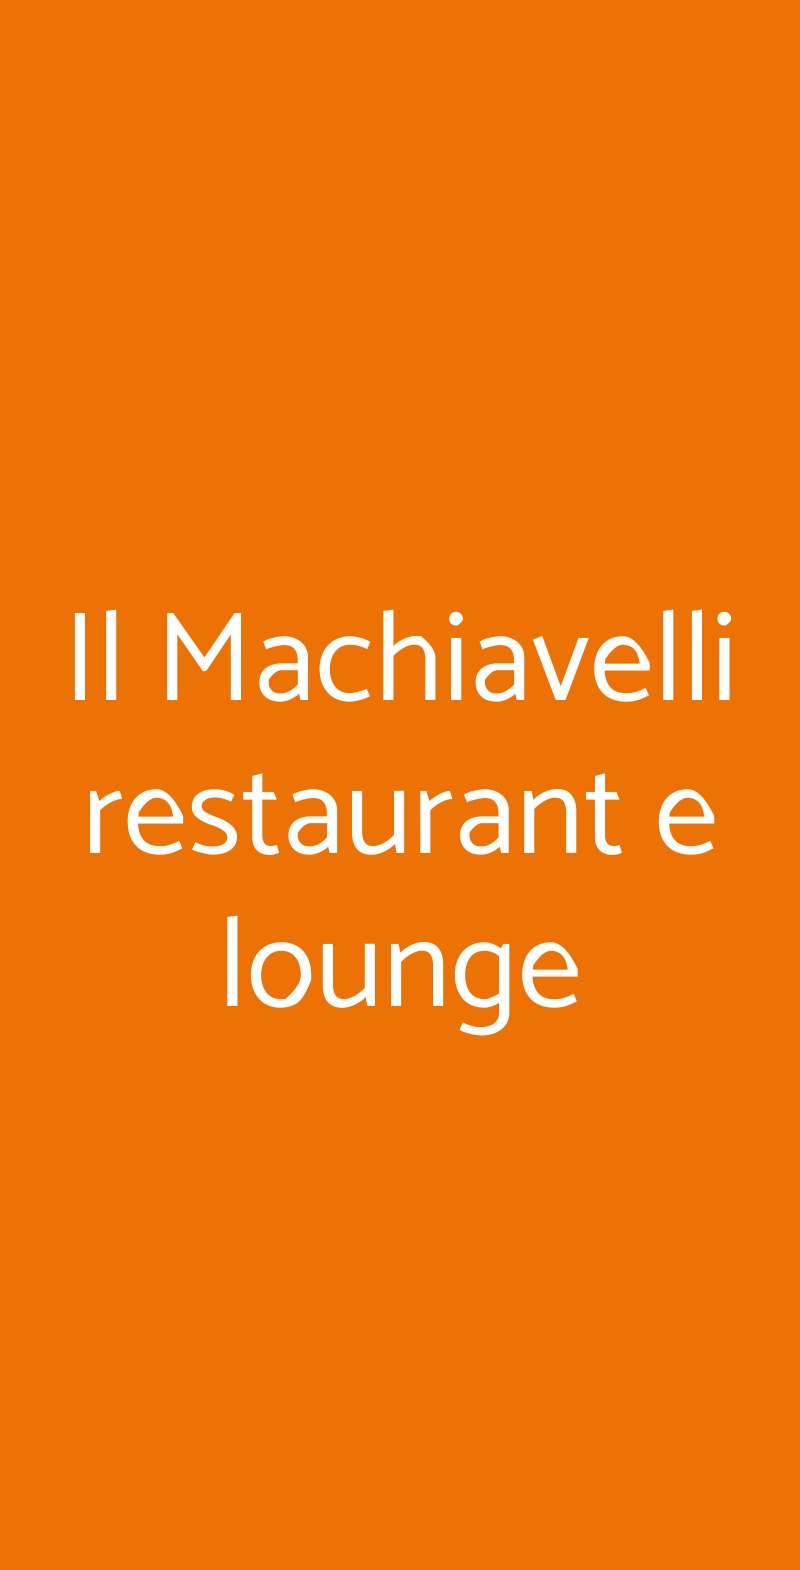 Il Machiavelli restaurant e lounge Pompei menù 1 pagina